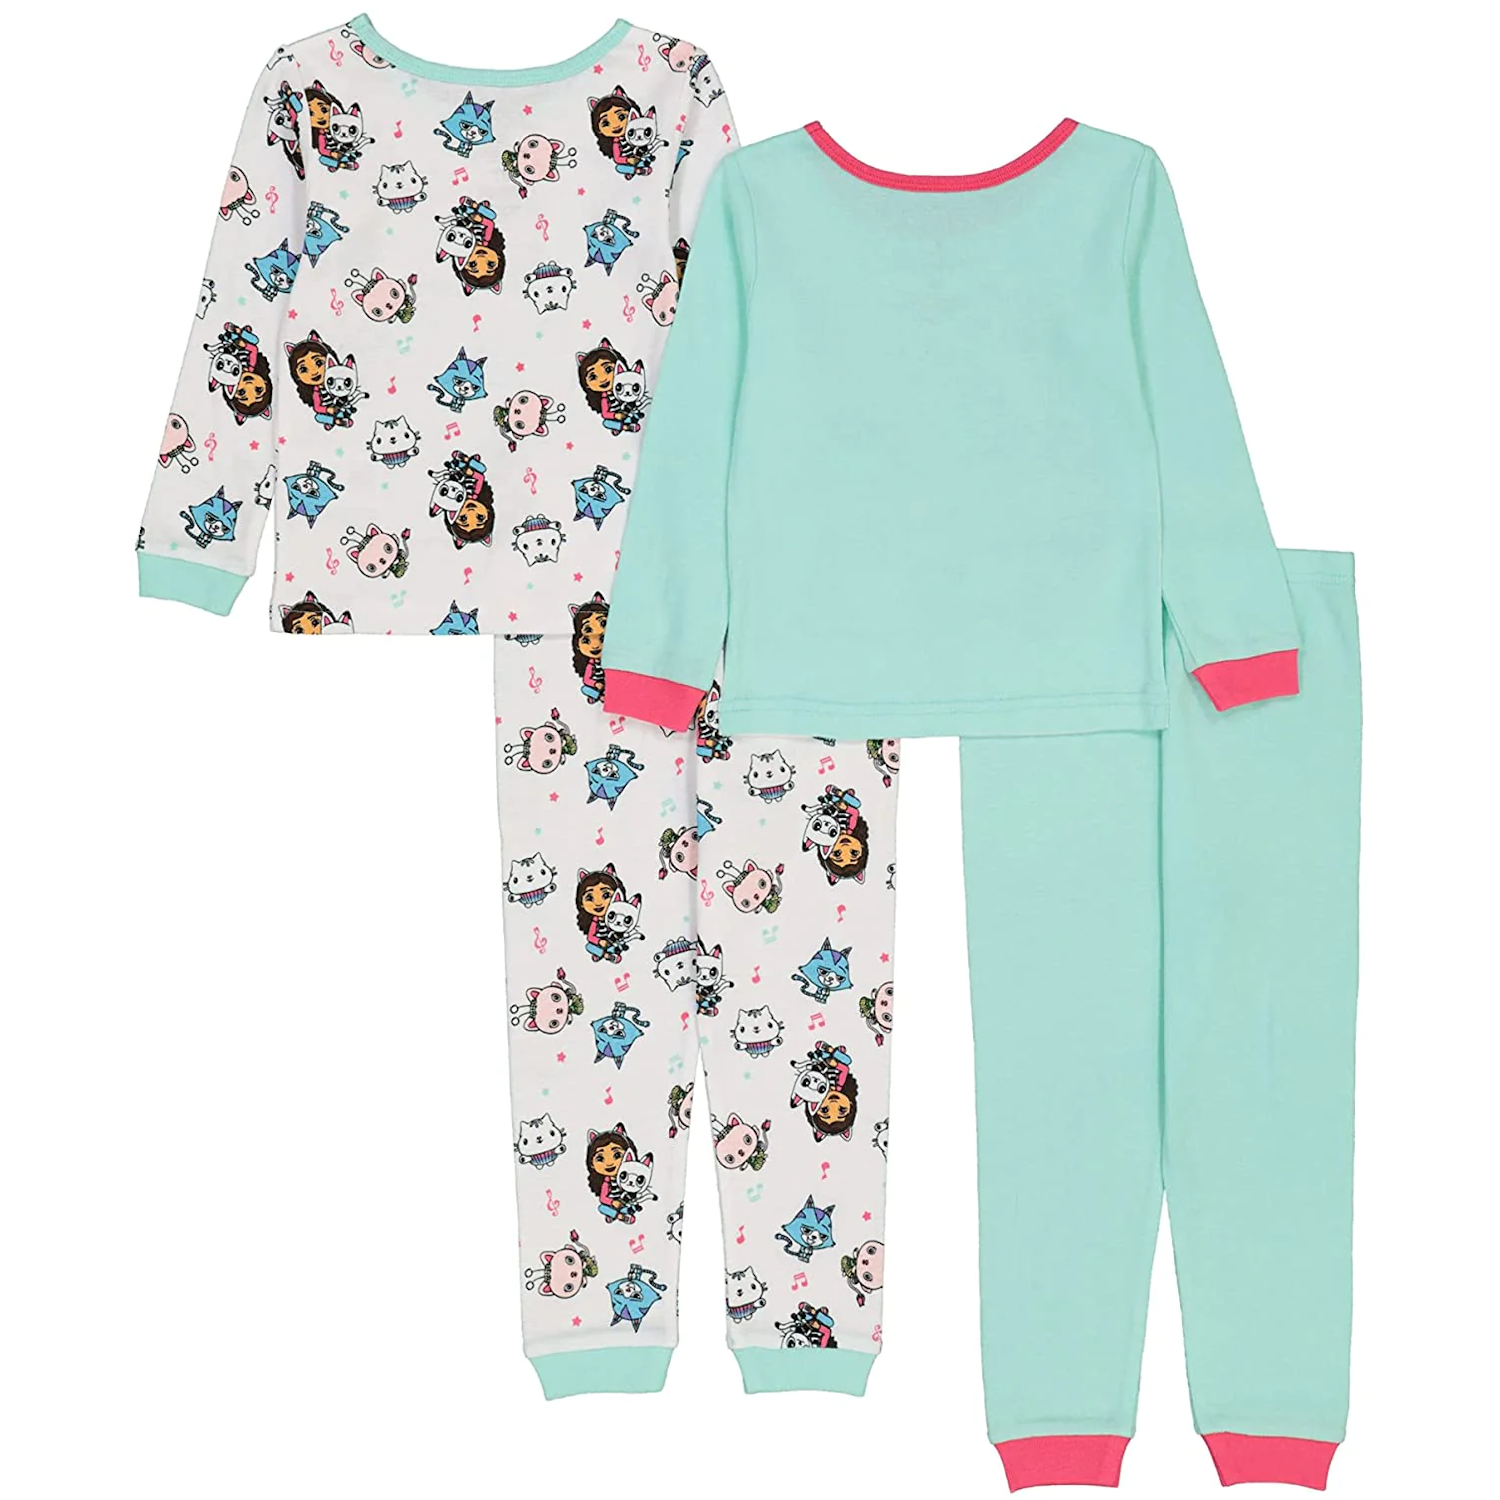 Gabby's Dollhouse Toddler Girls' 4 Piece Long Pajama Set, Sizes 2T-4T